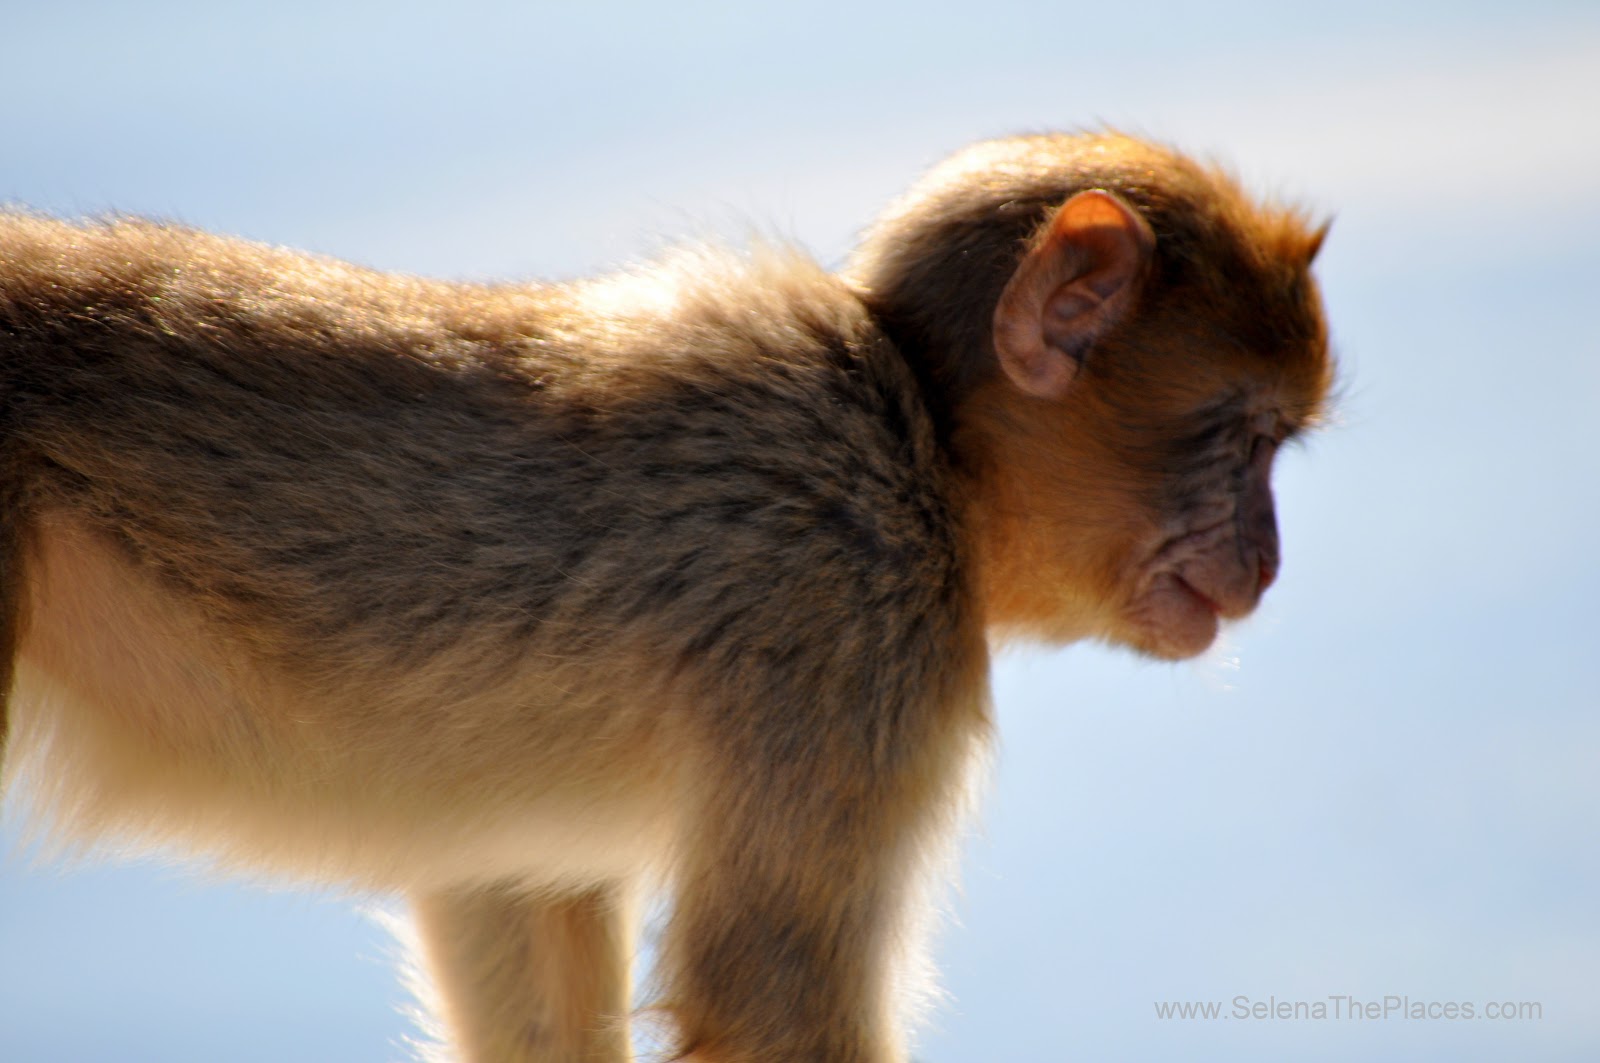 The Macaque Monkeys of Gibraltar